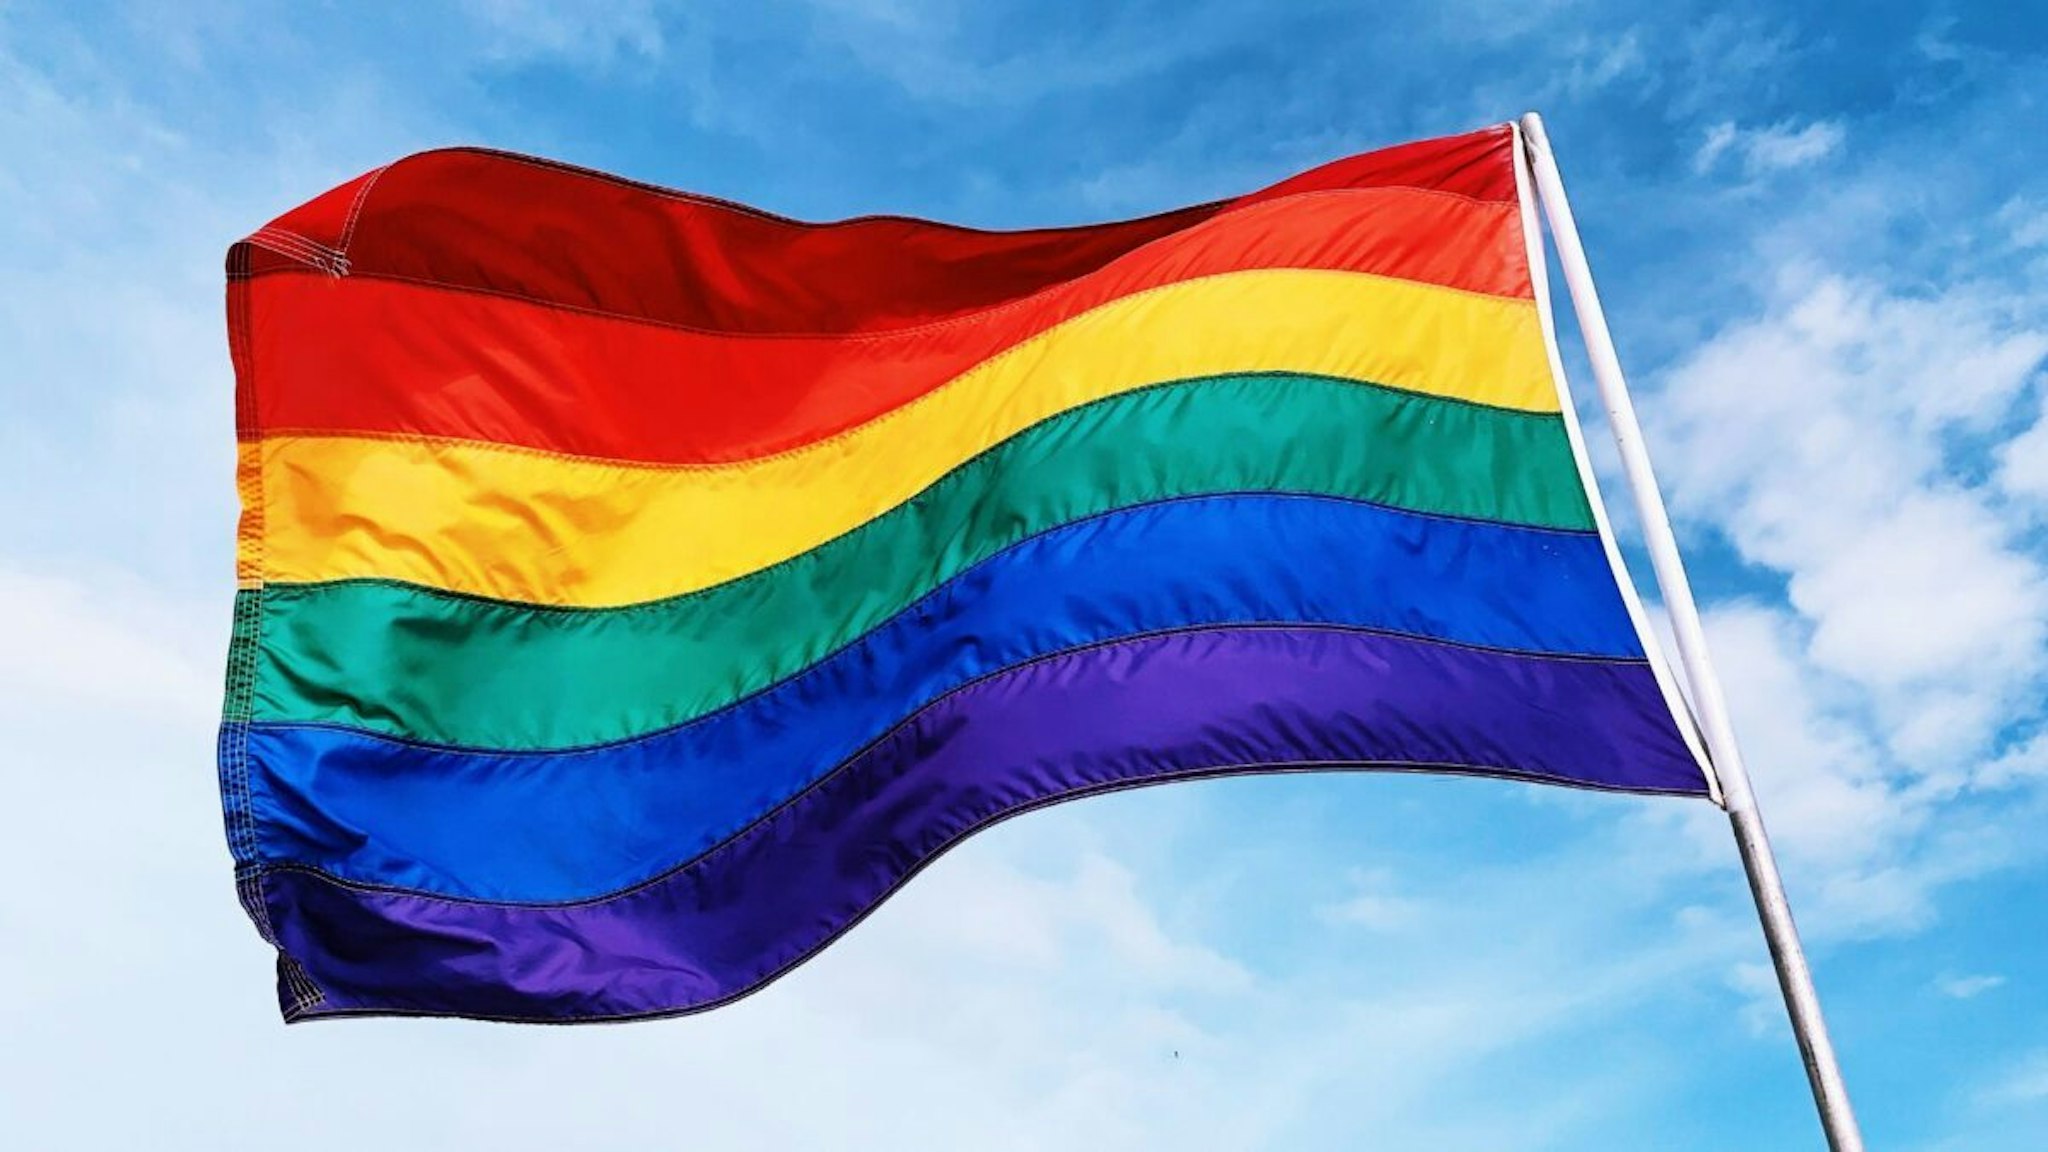 Rainbow flag waving in the wind against blue sky